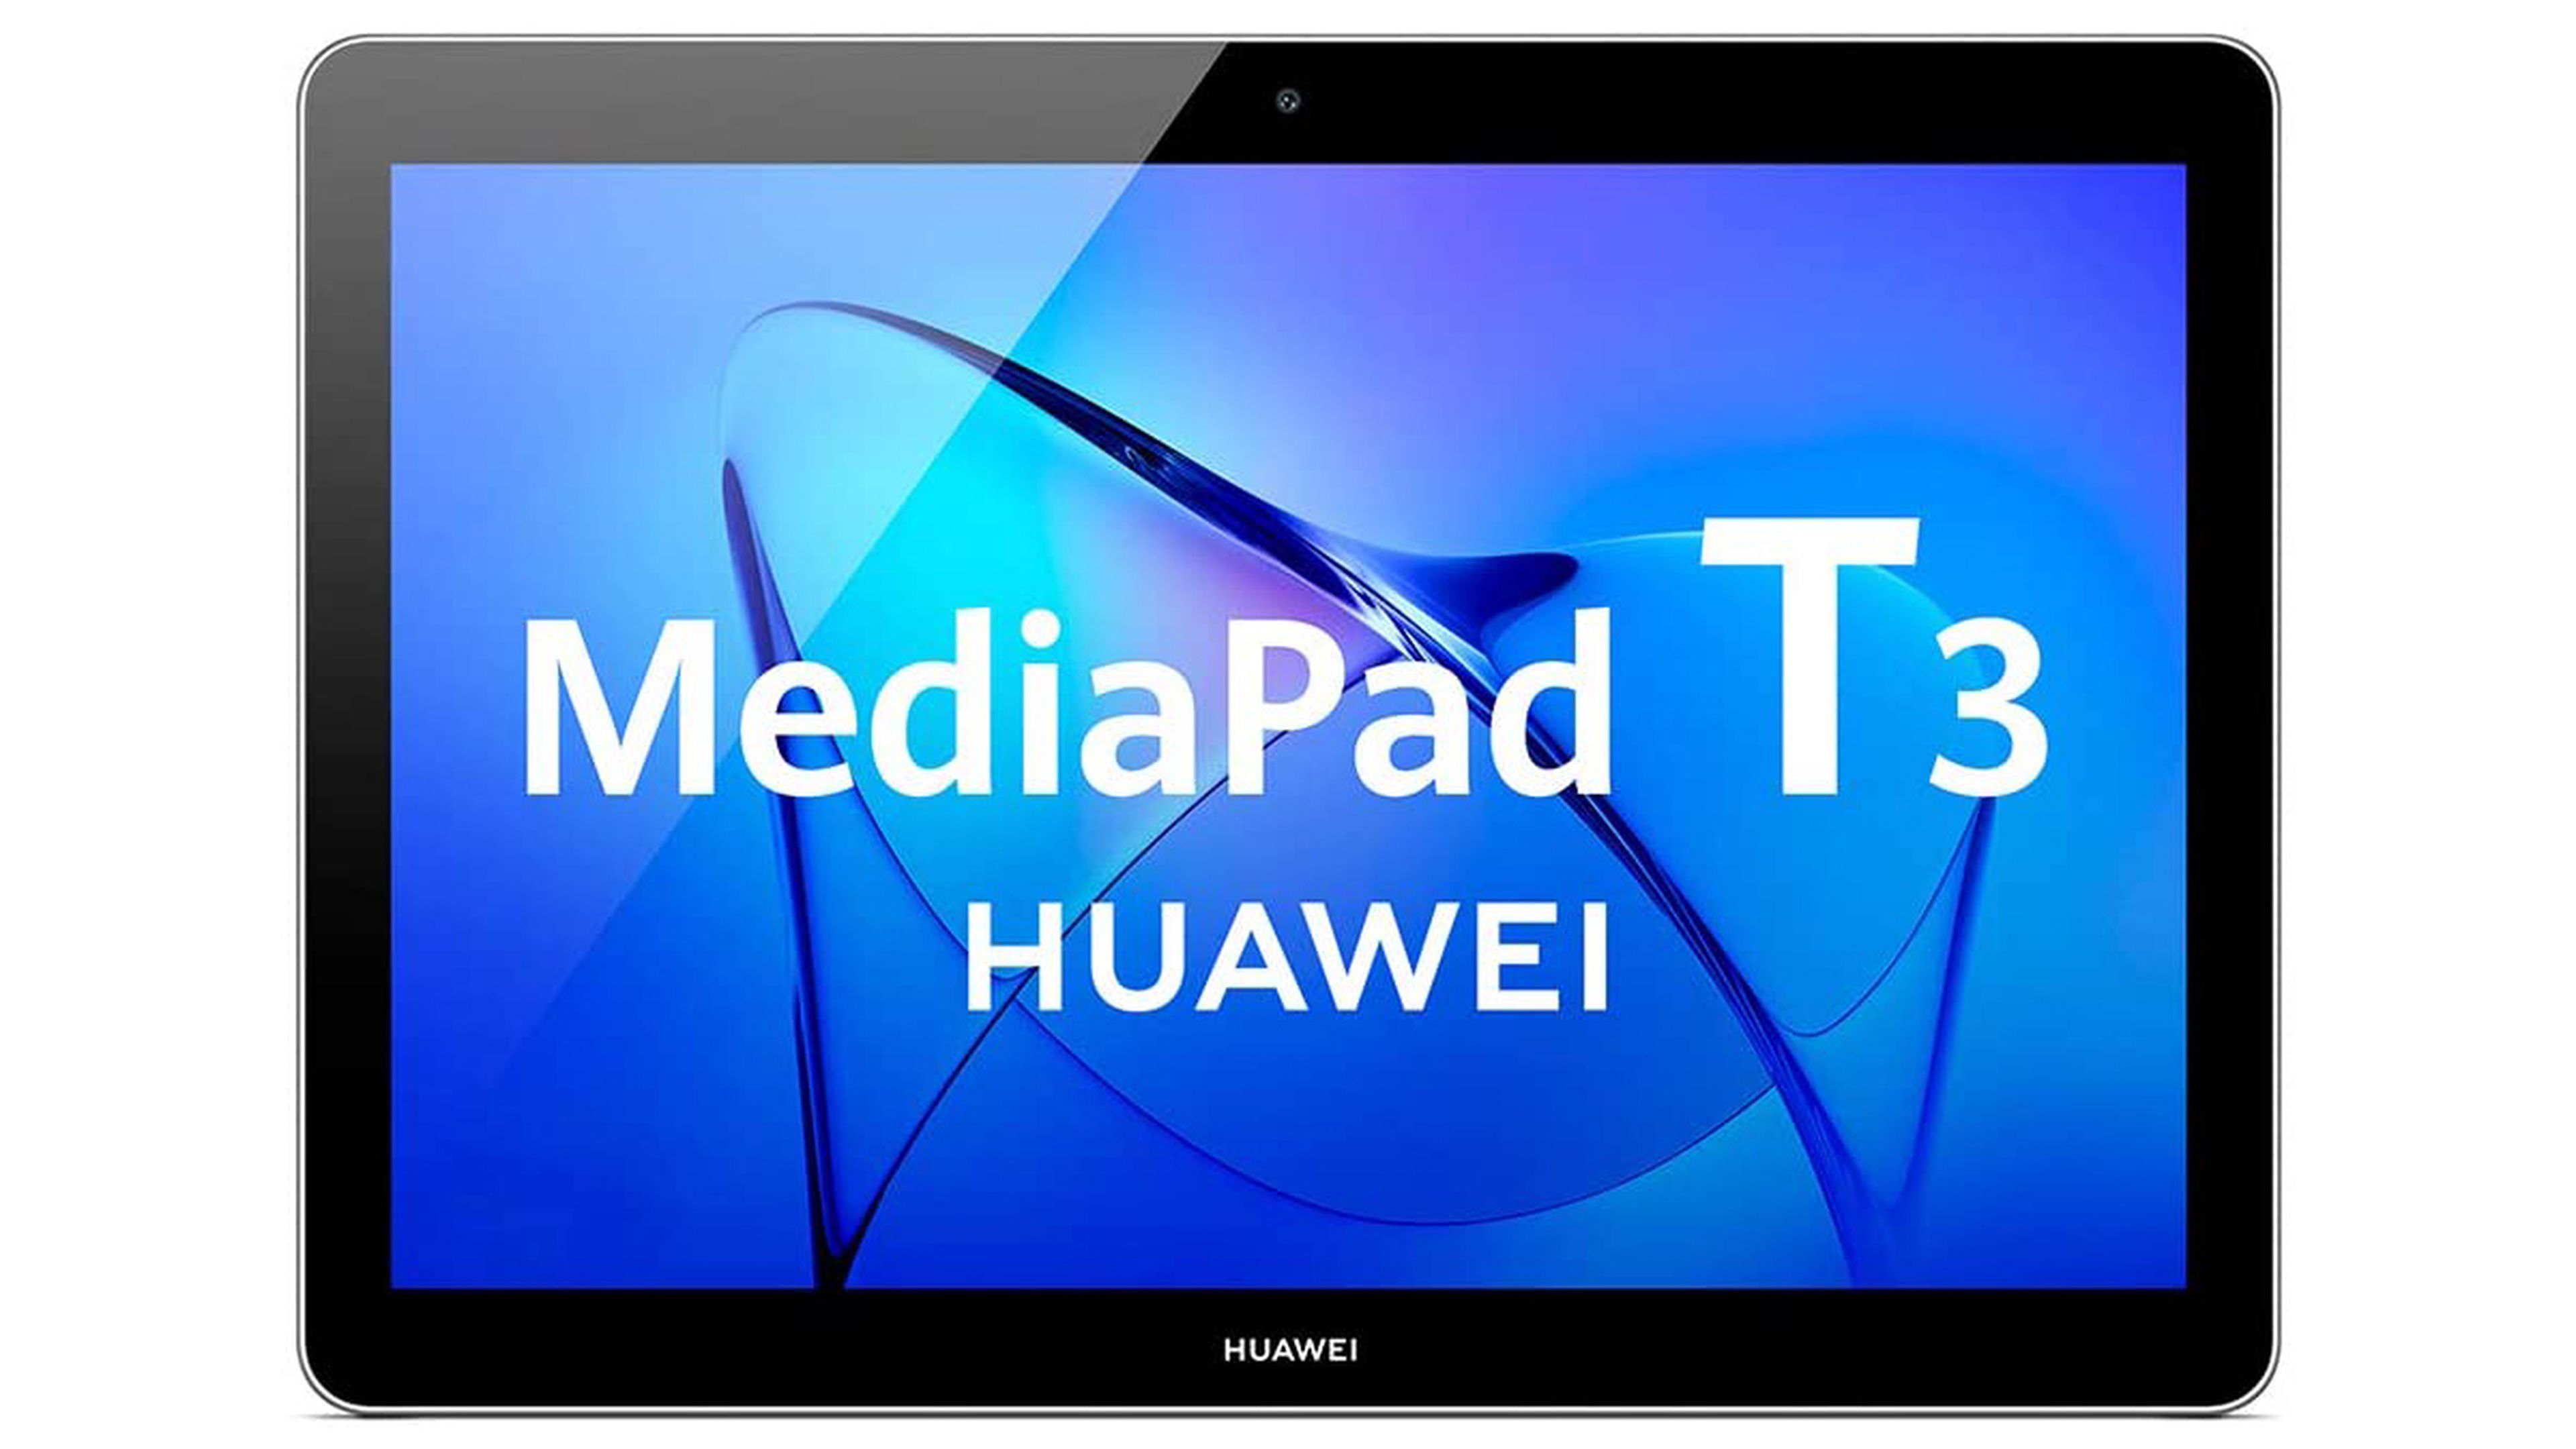 HUAWEI Mediapad T3